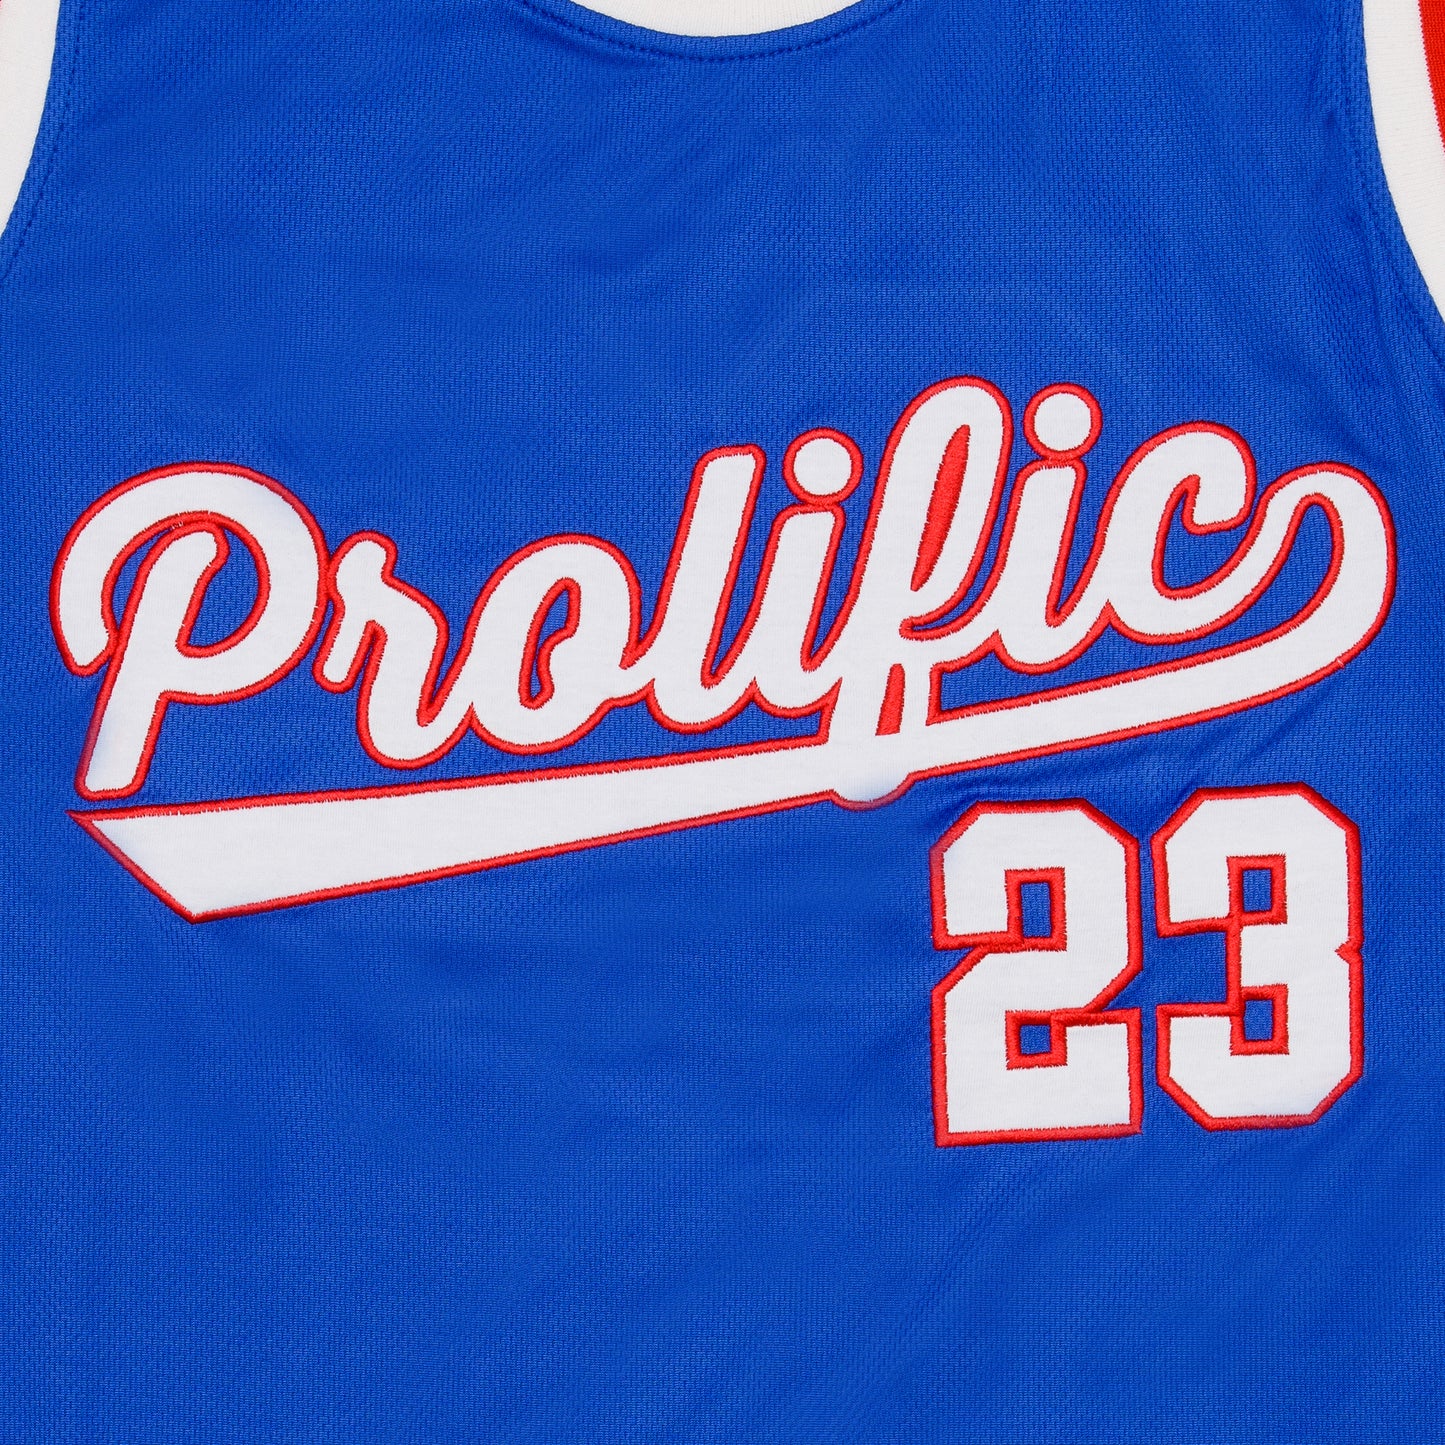 Prolific 23 Basketball Jersey - SALE size MEDIUM